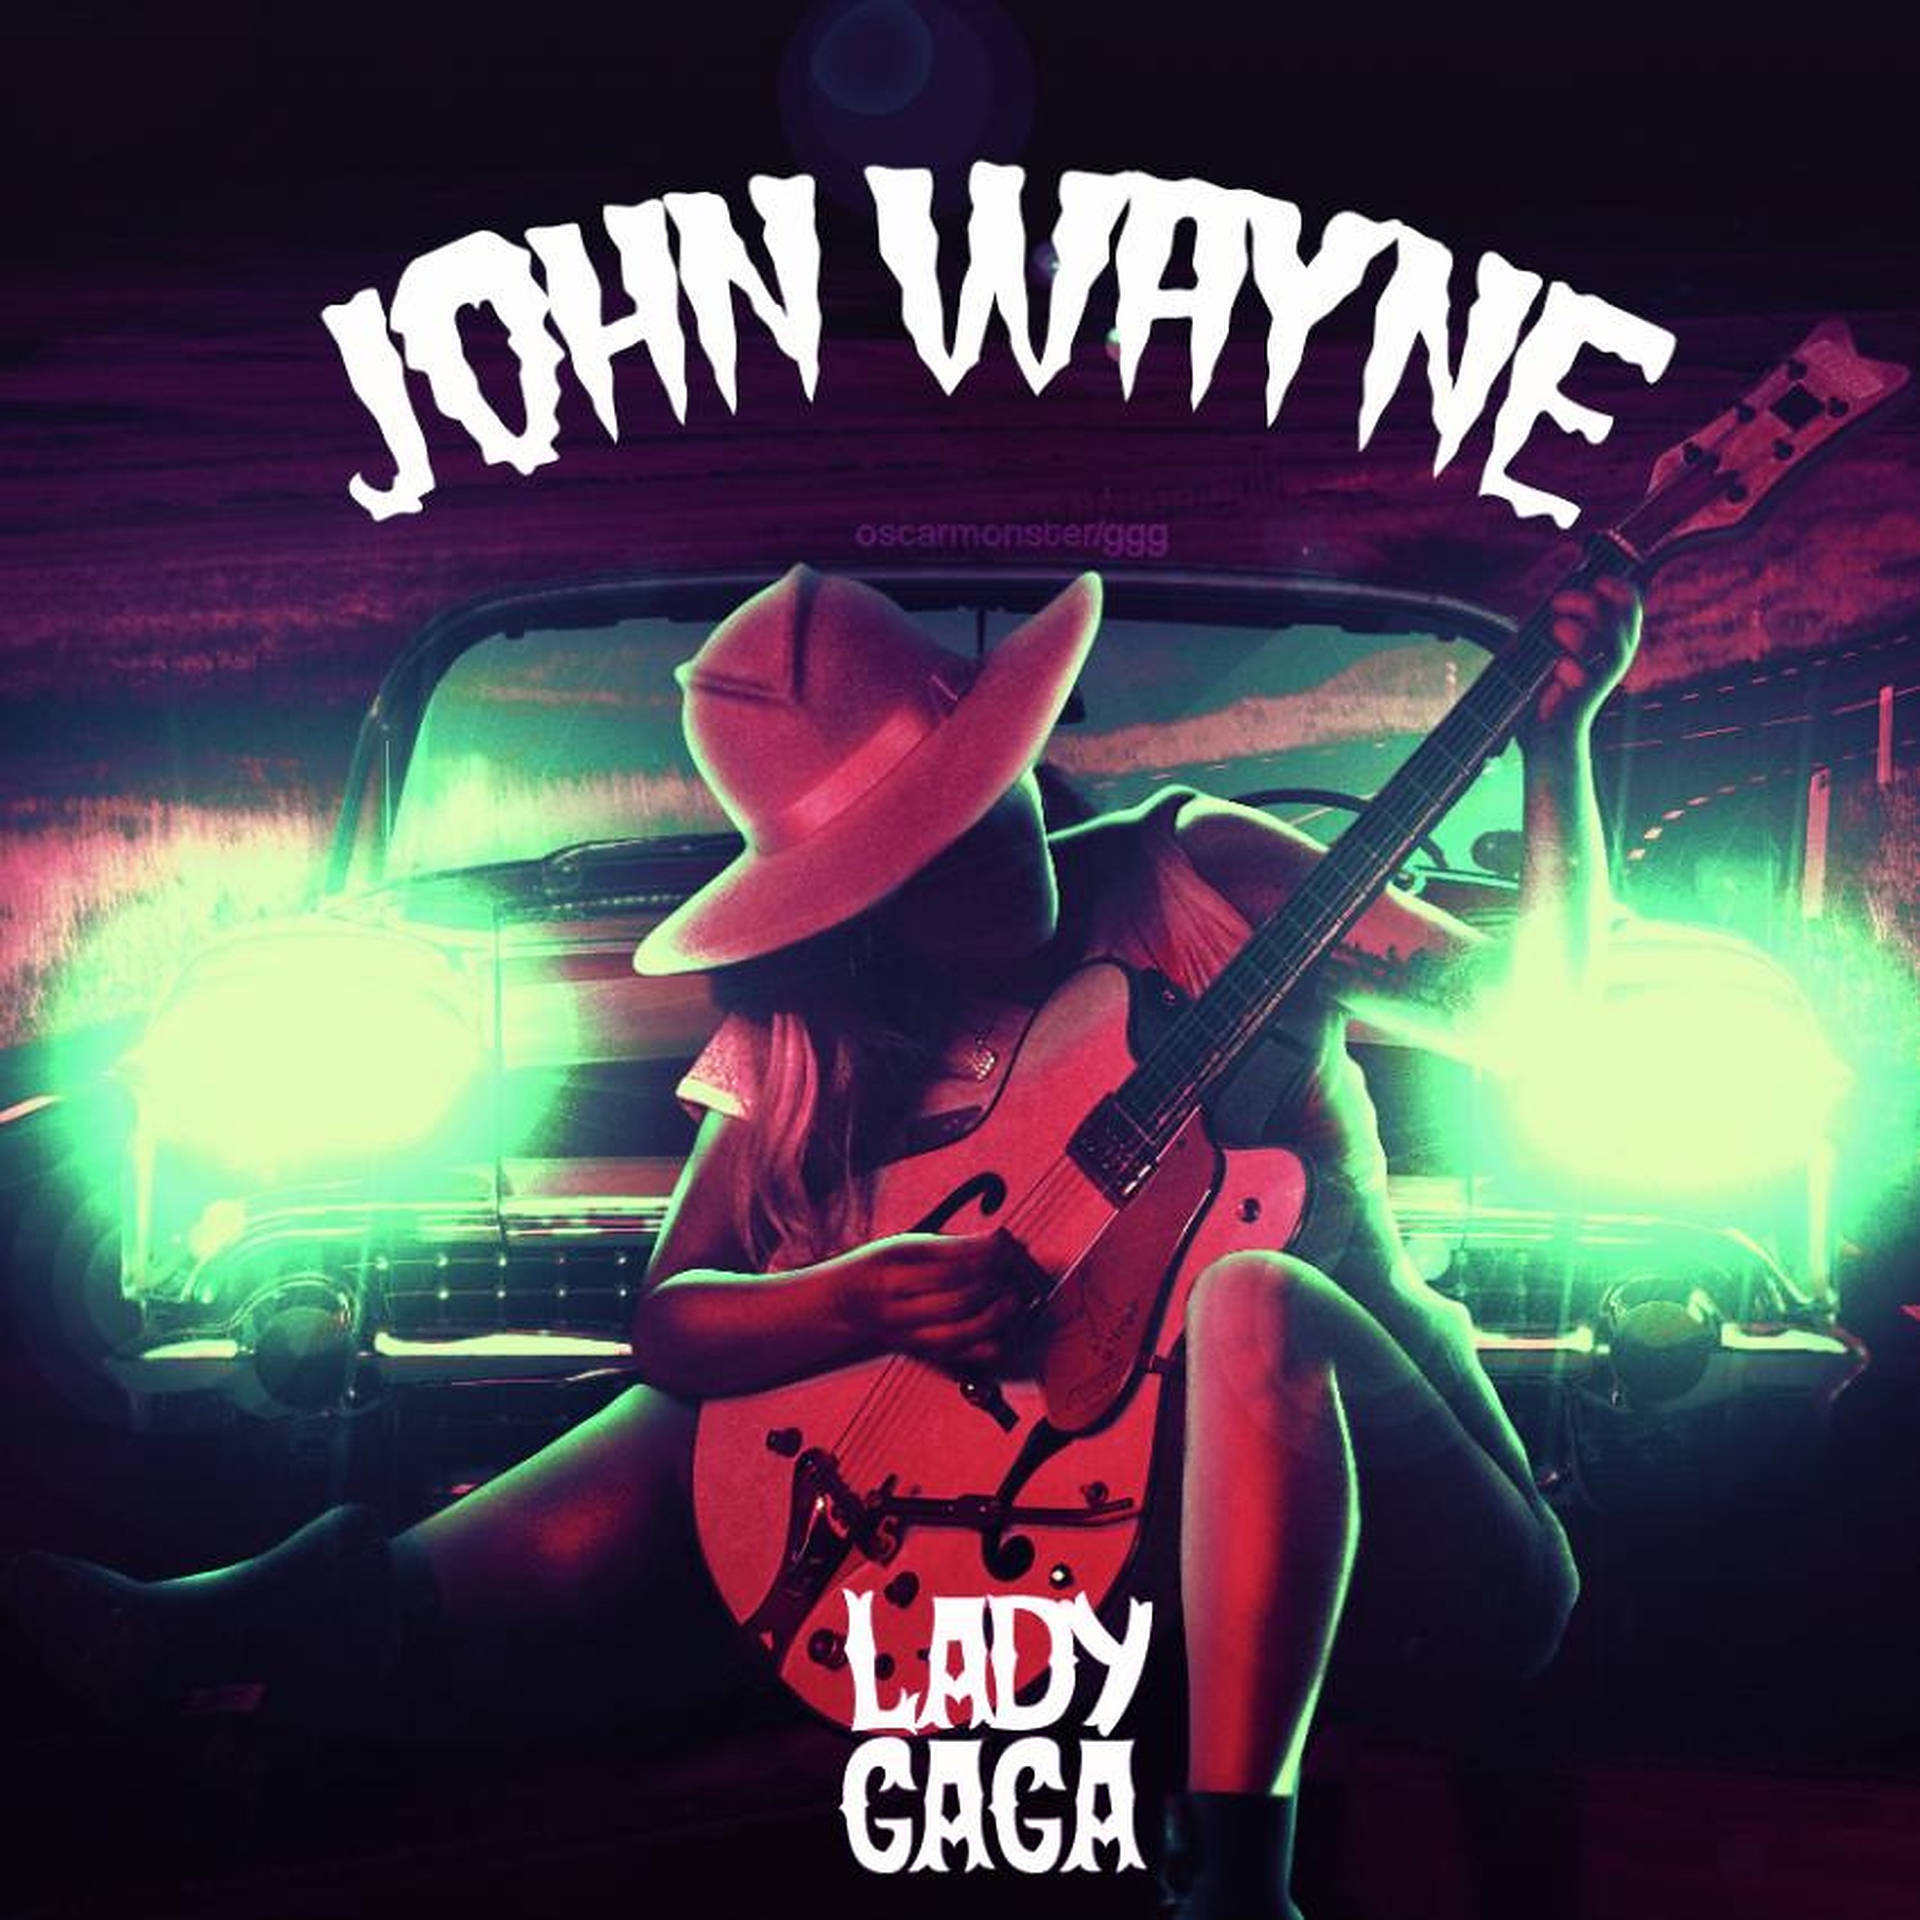 John Wayne og Lady Gaga poster Wallpaper